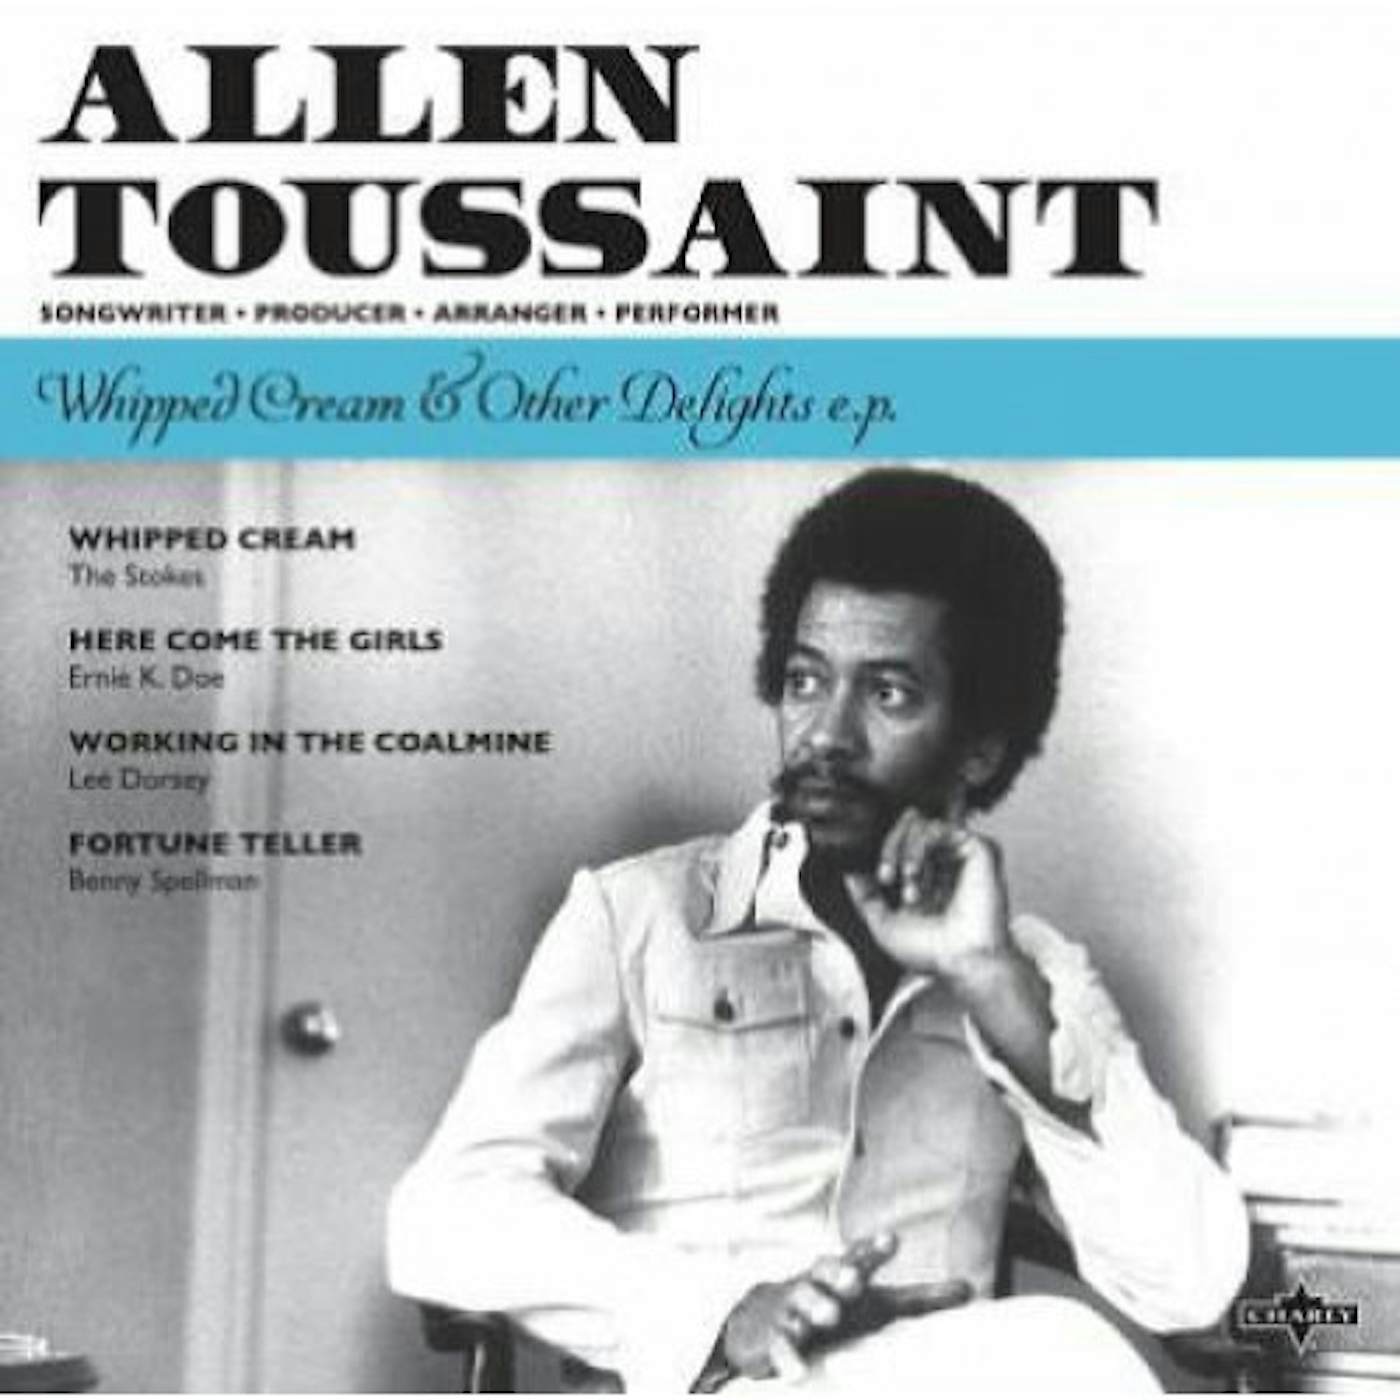 Allen Toussaint WHIPPED CREAM & OTHER DELIGHTS EP (Vinyl)